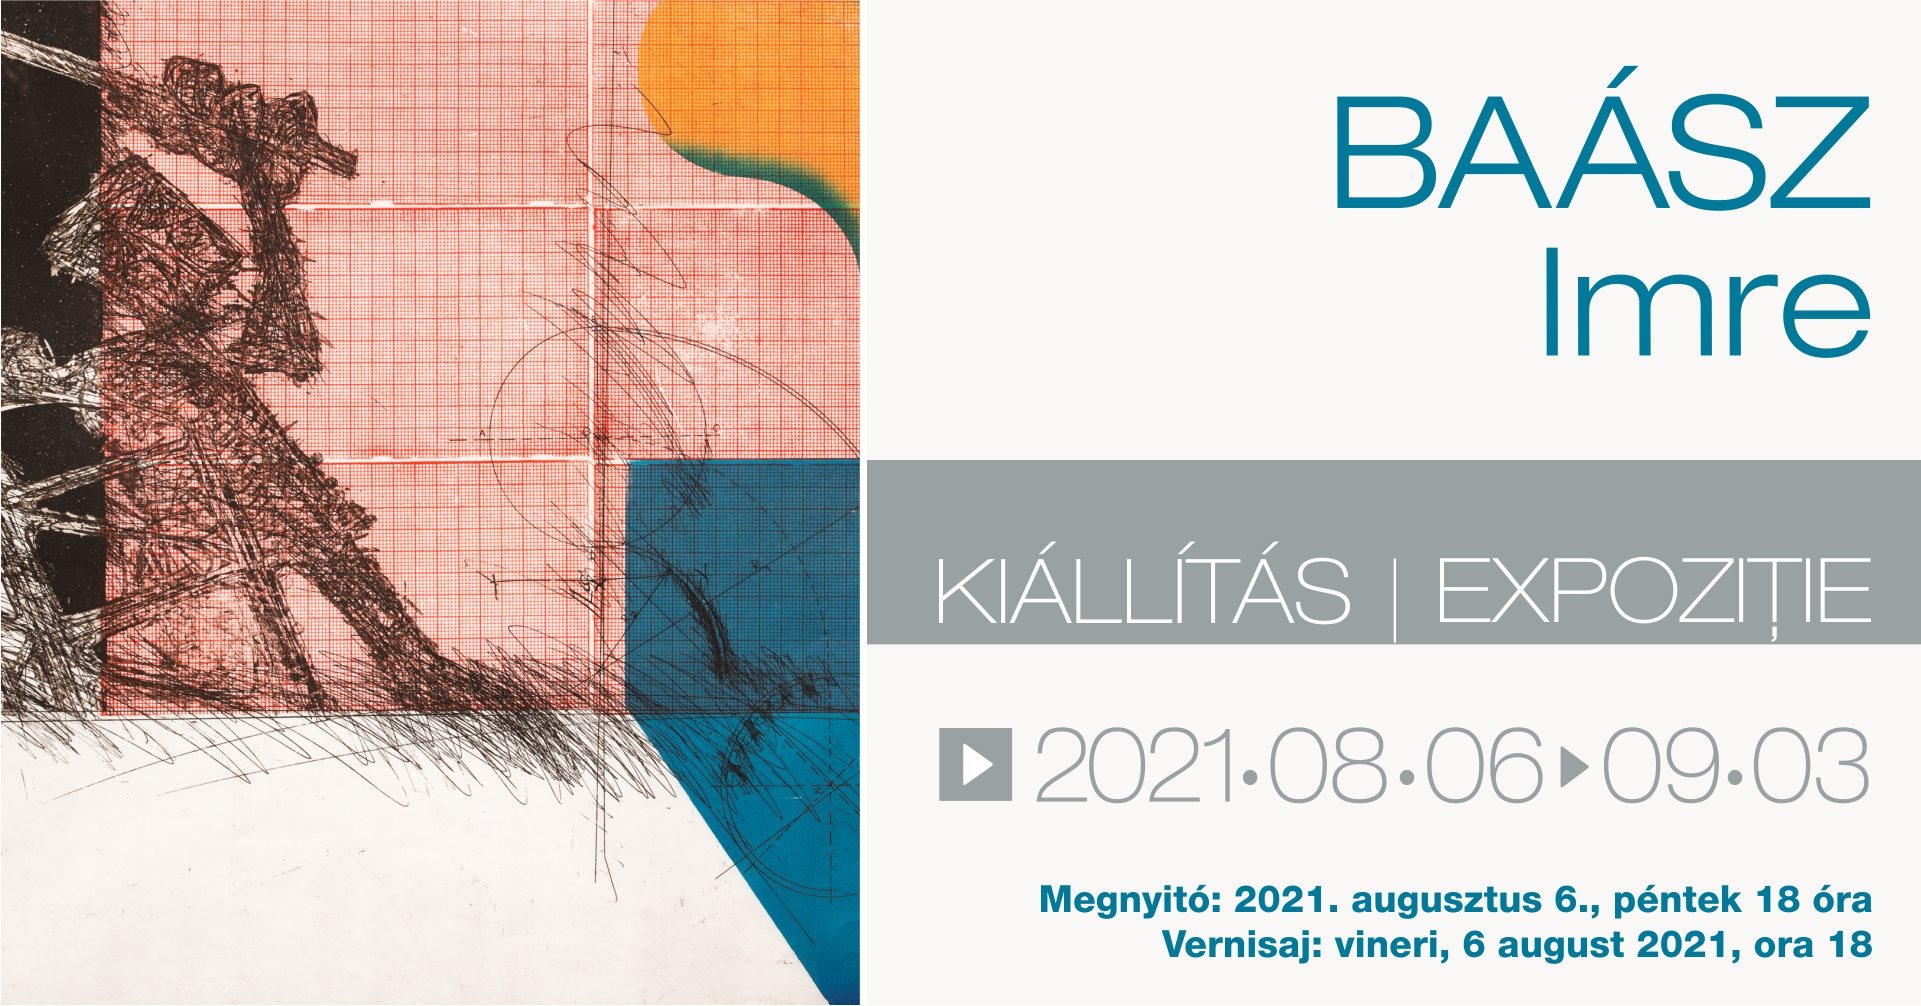 Exhibition of the artist Baász Imre 